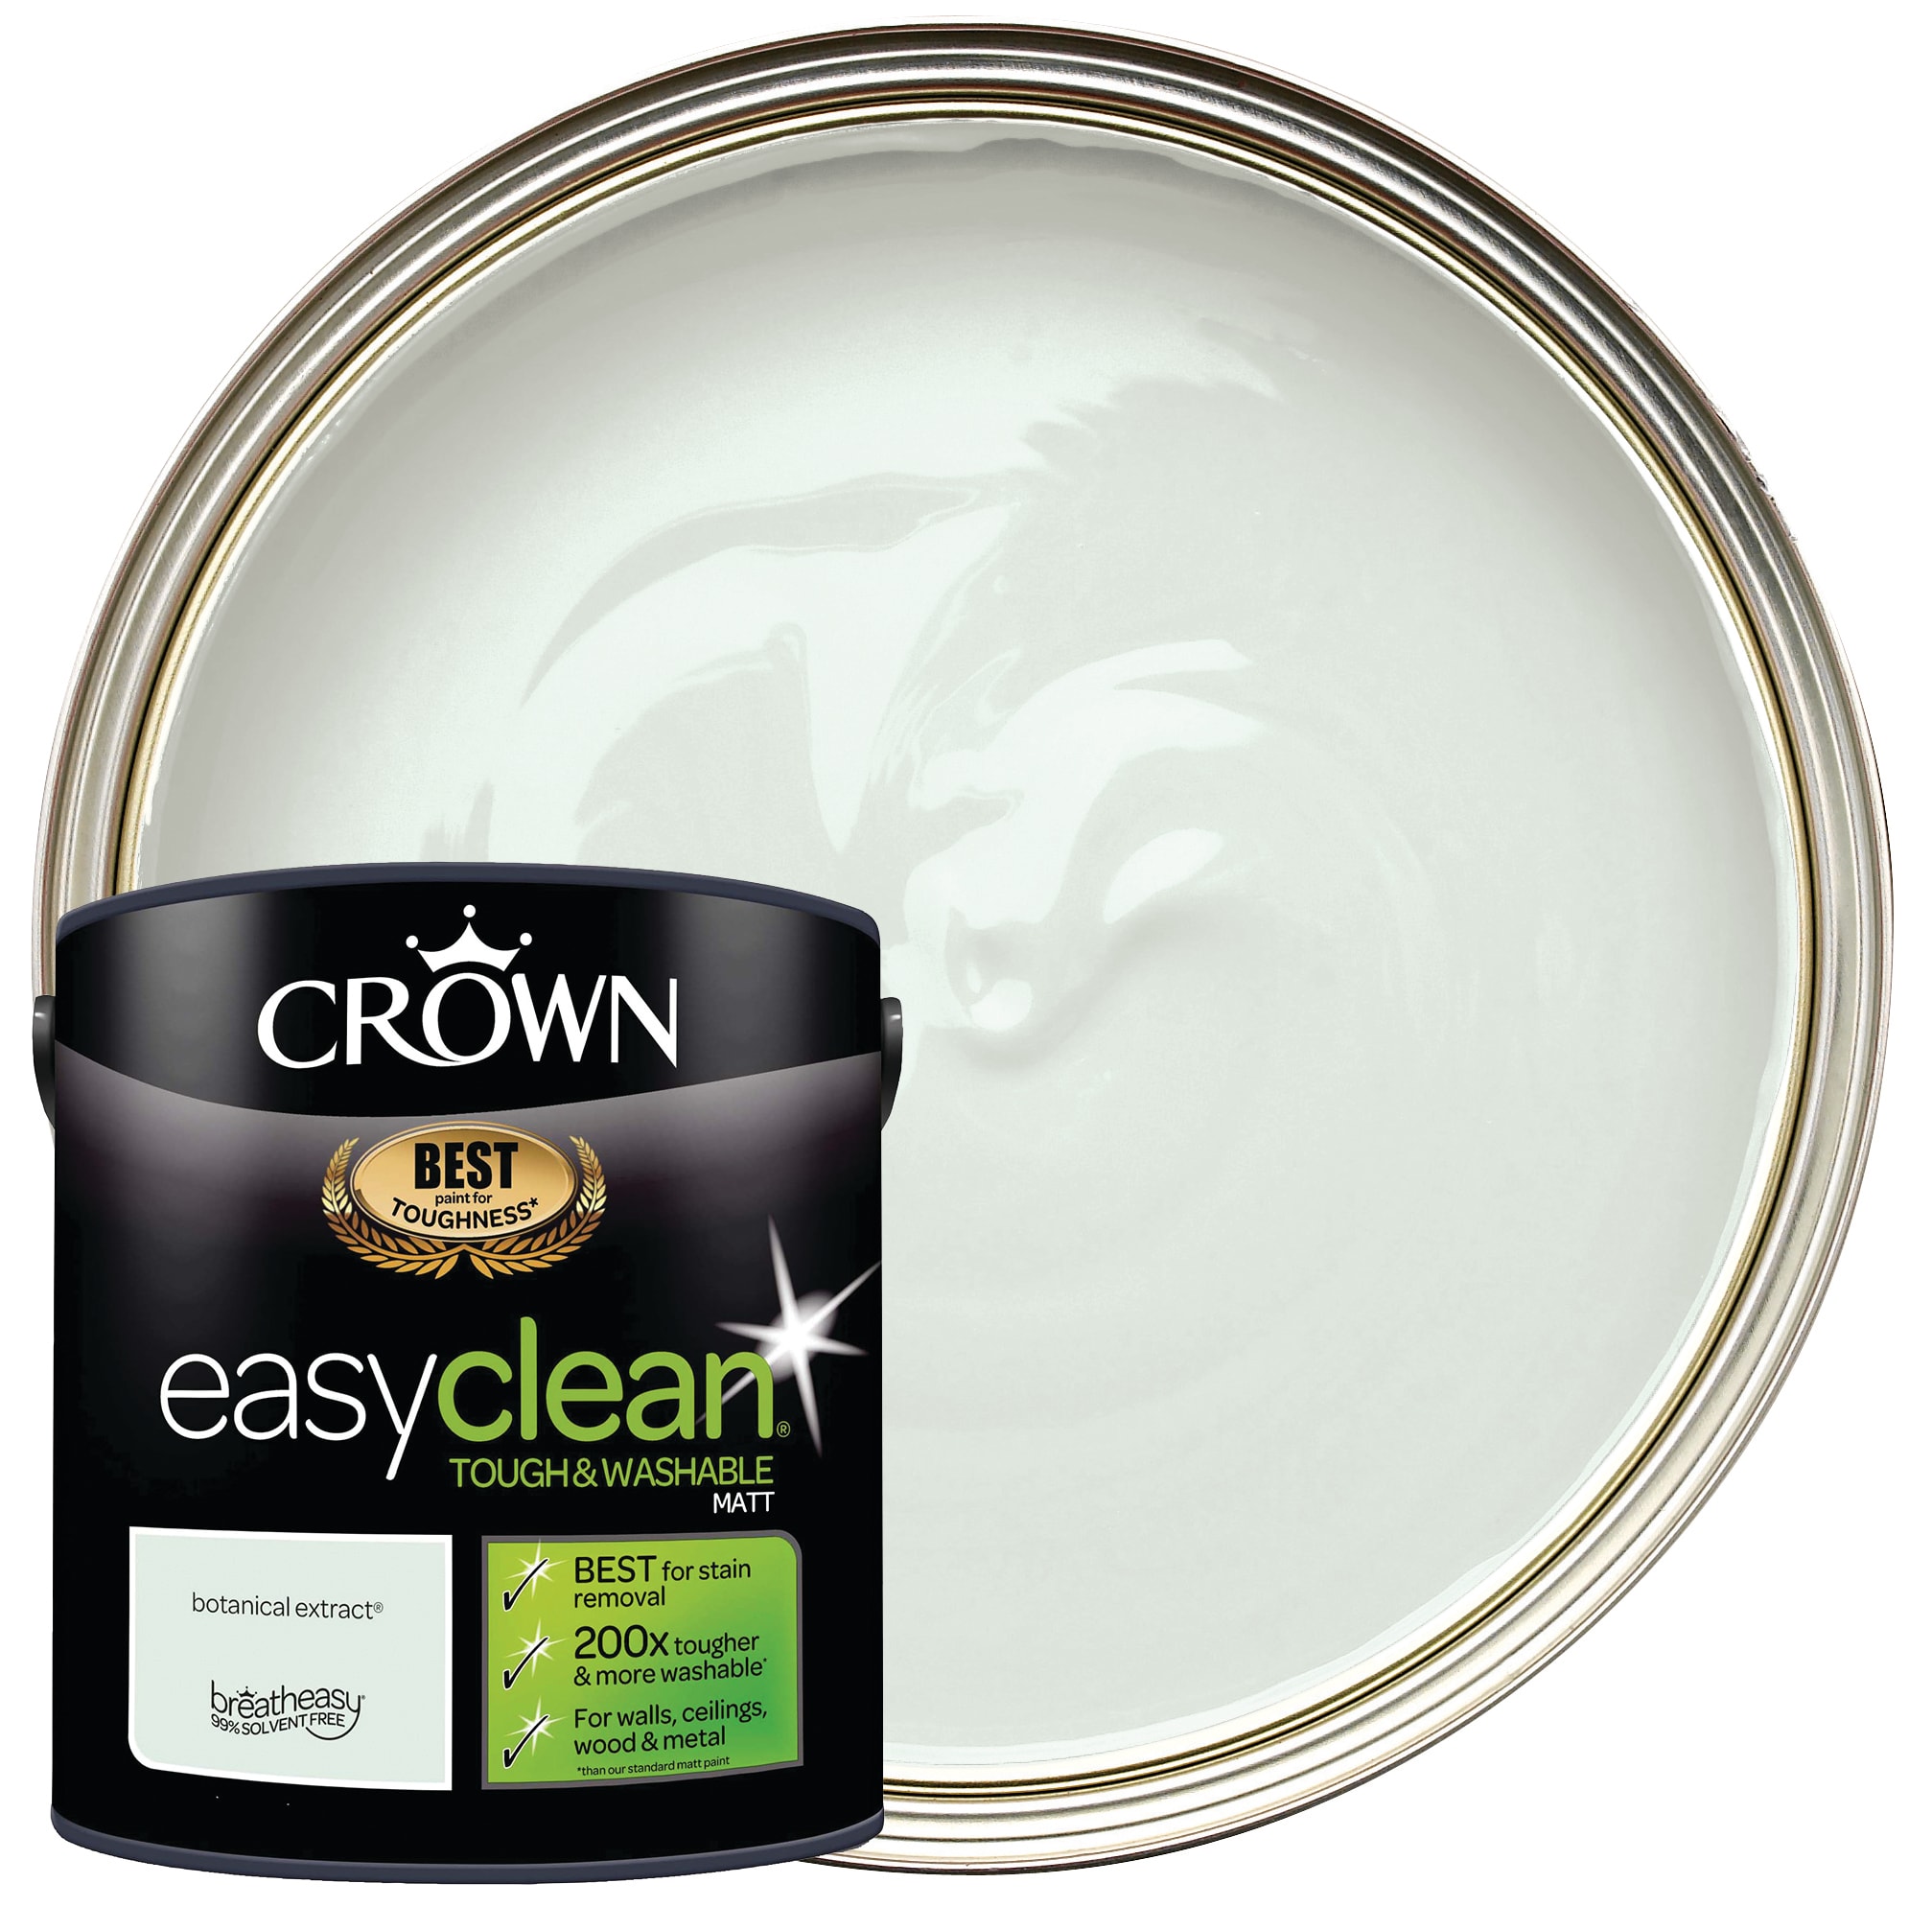 Crown Easyclean Matt Emulsion Paint - Botanical Extract